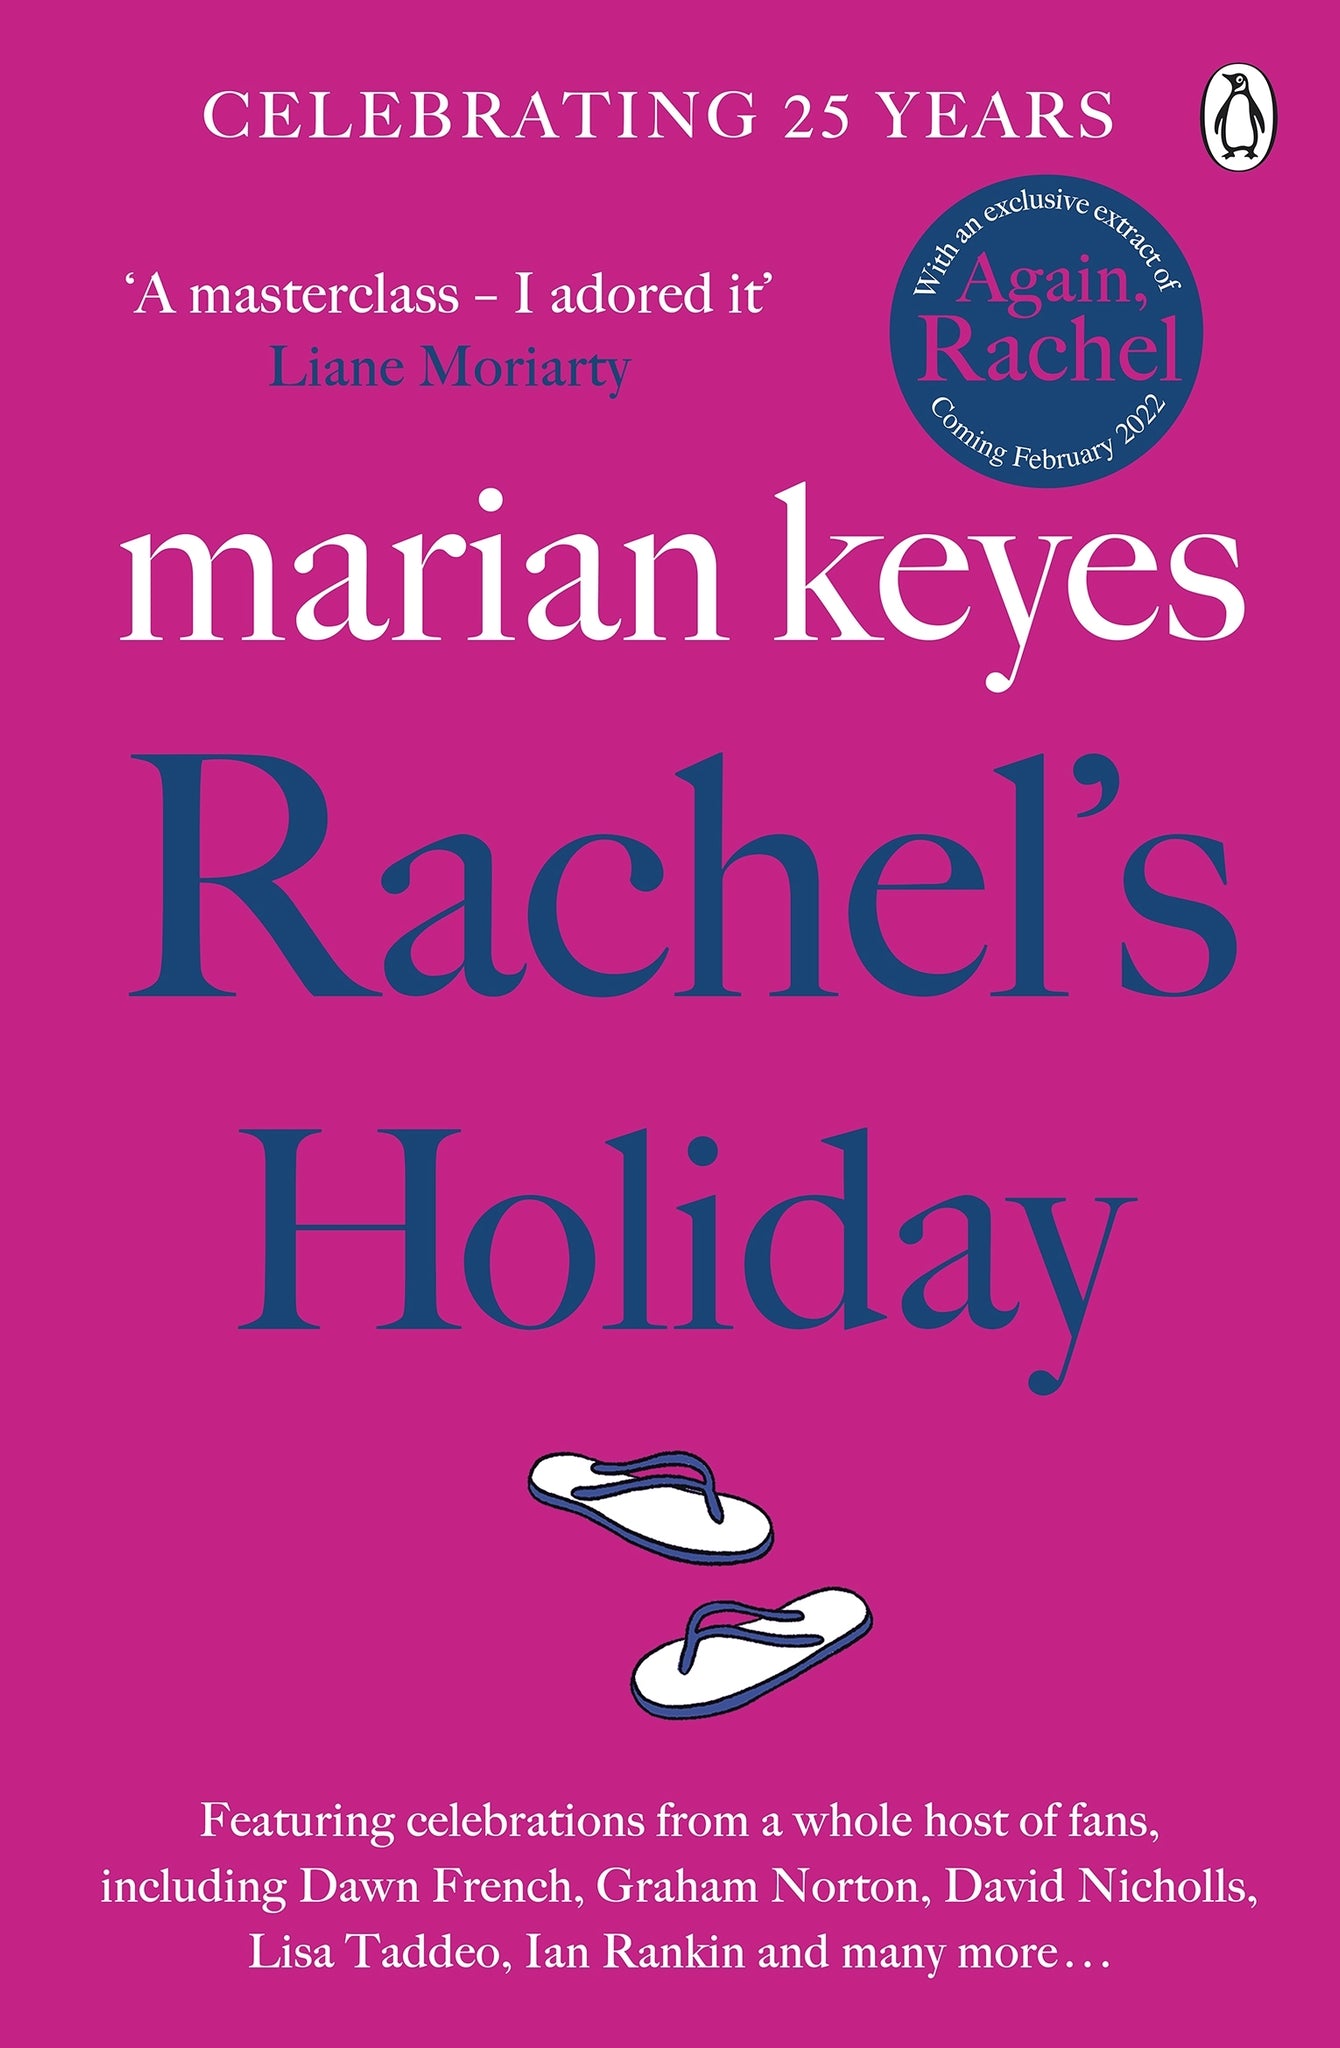 Rachel's Holiday by Marian Keyes